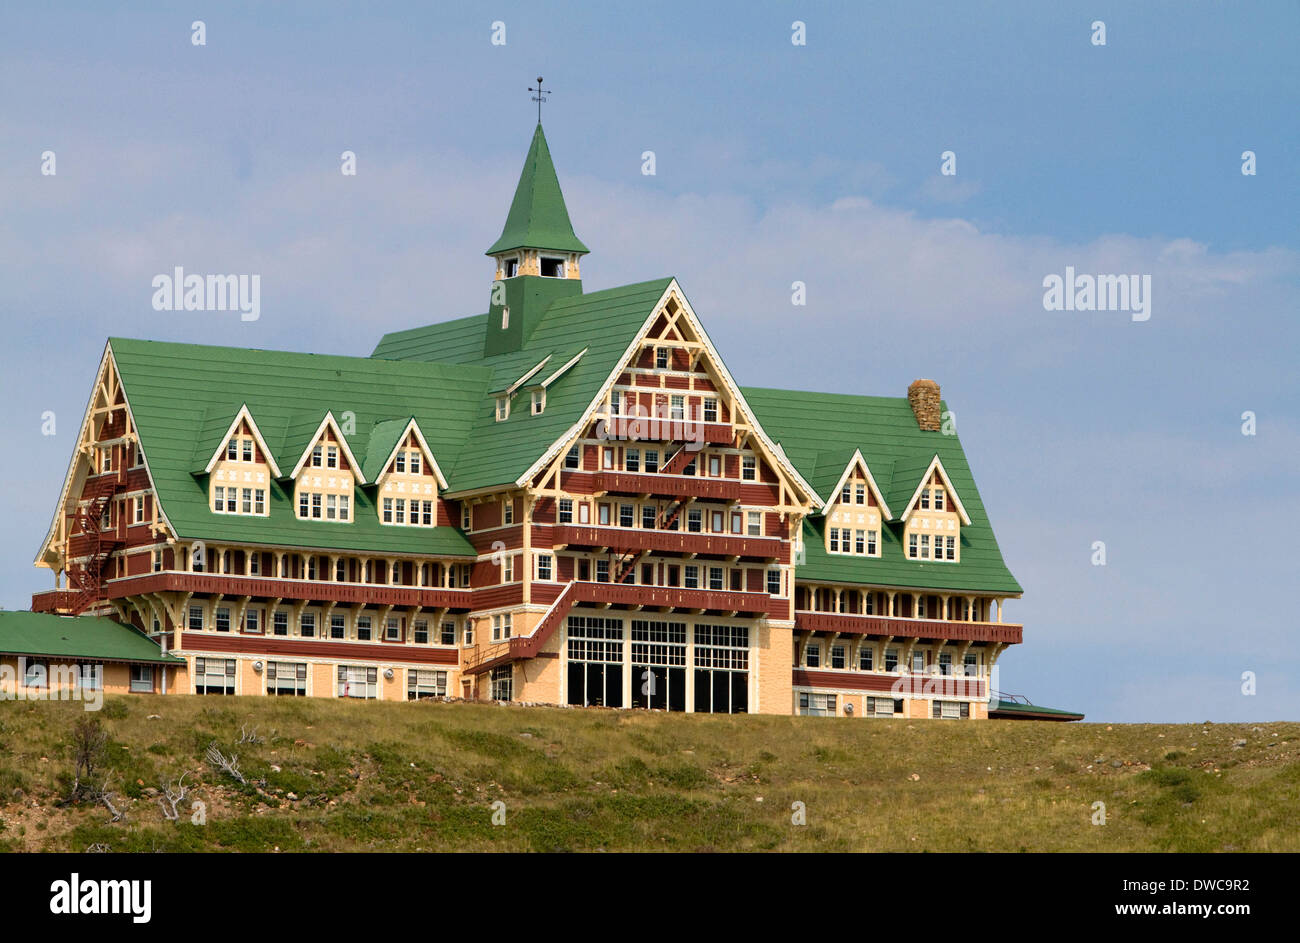 Prince Of Wales Hotel befindet sich in Waterton Lakes Nationalpark, Alberta, Kanada. Stockfoto